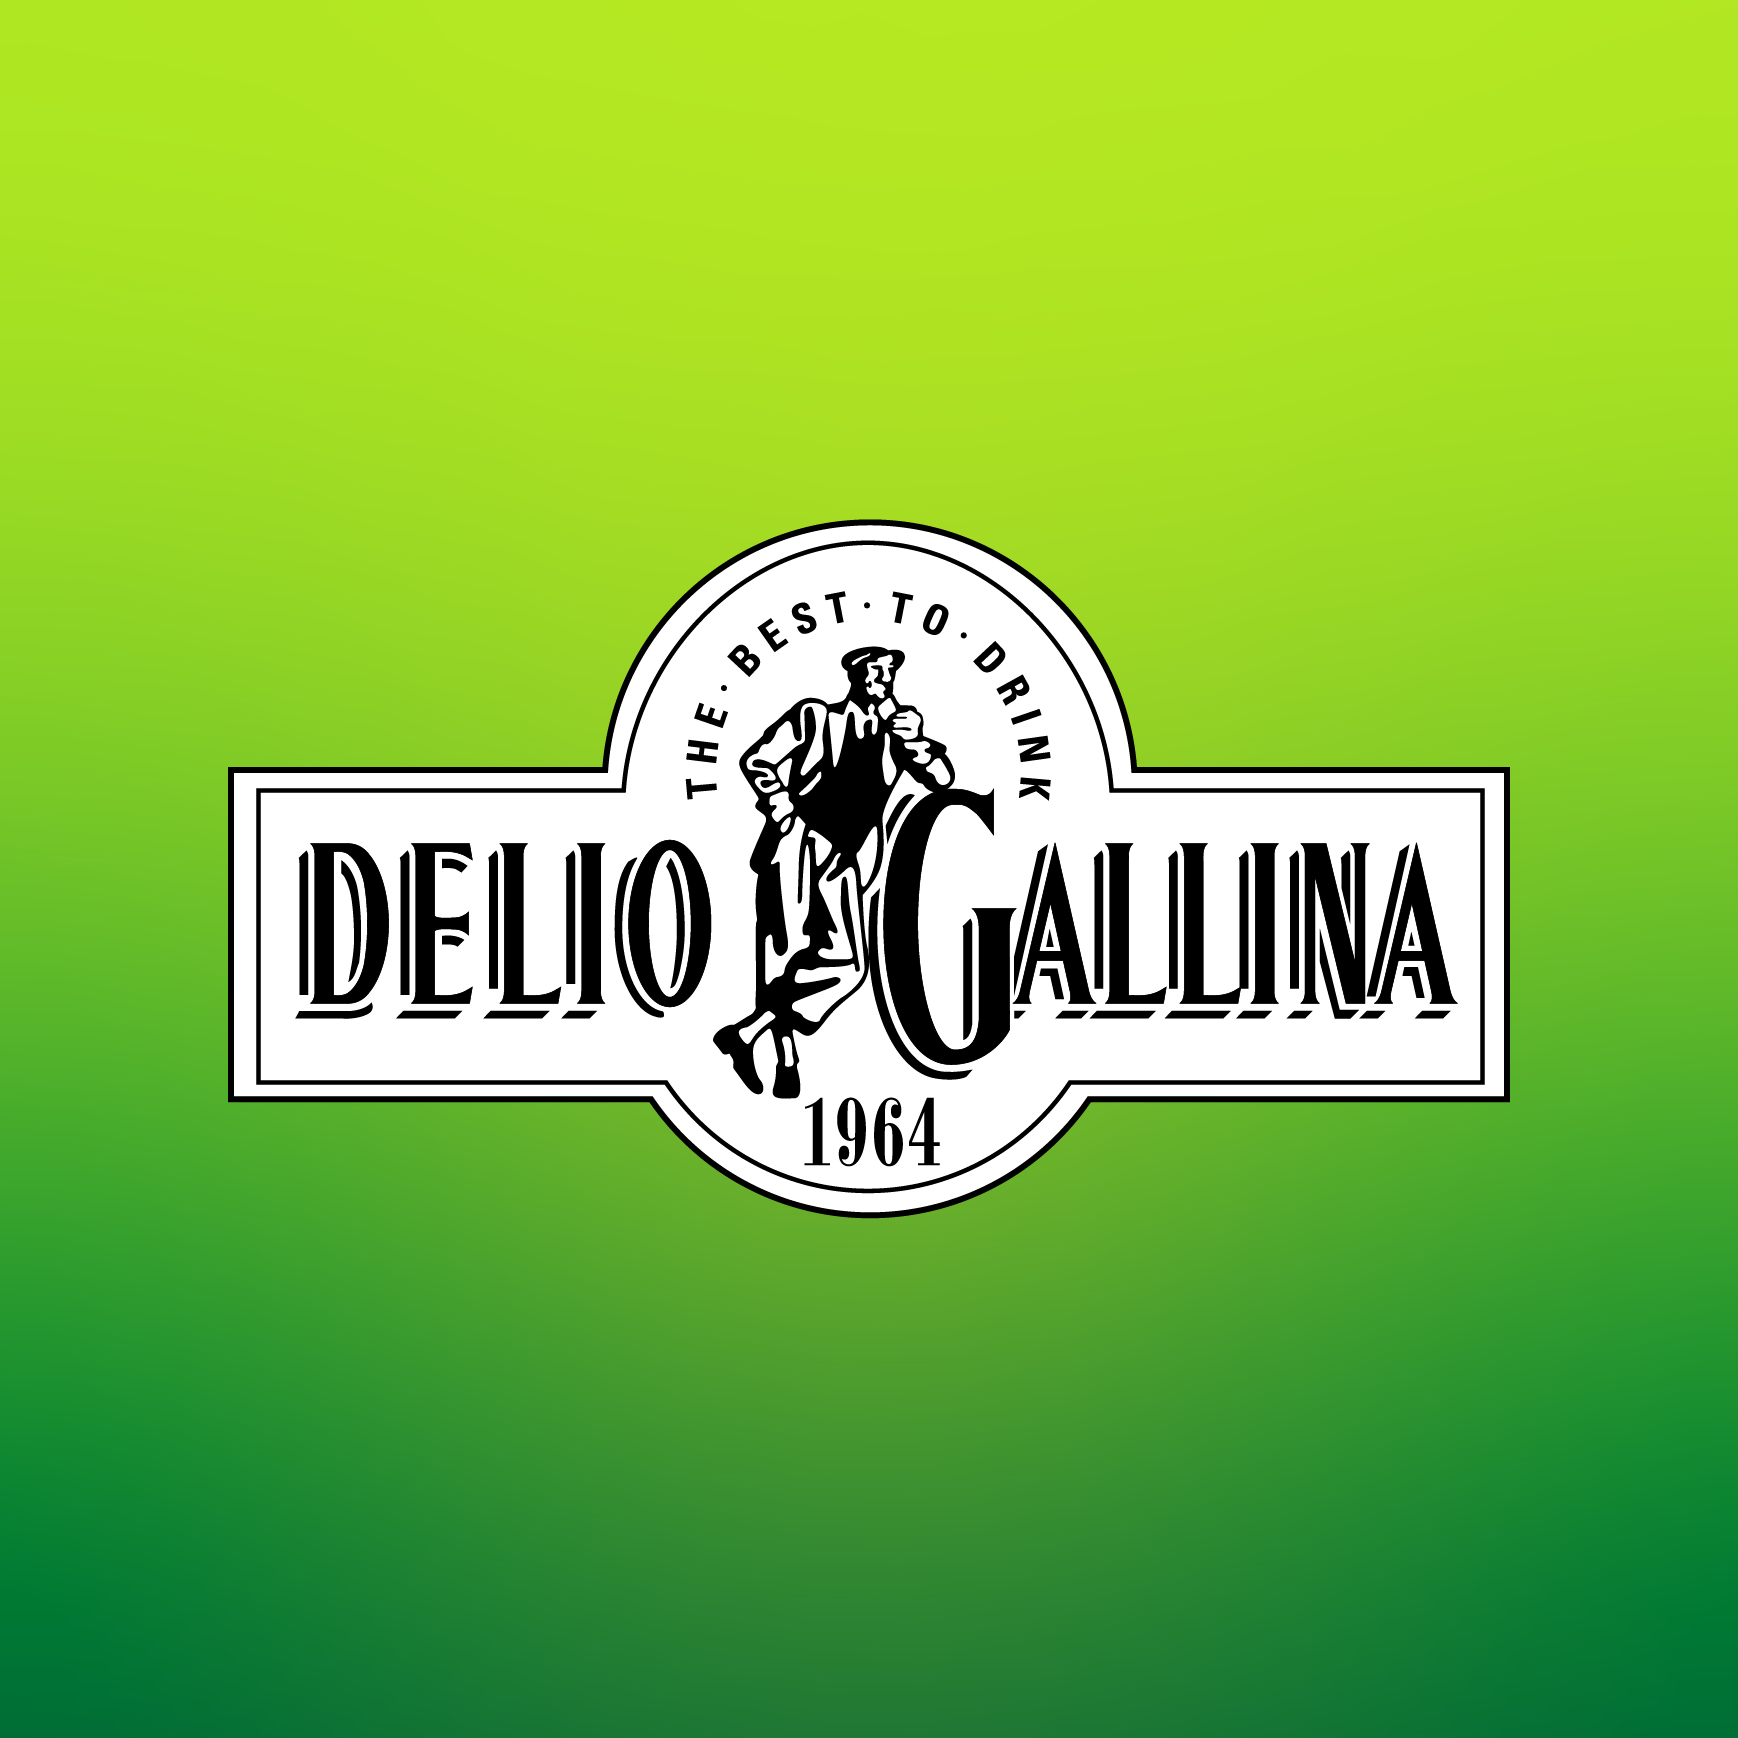 Club Image for TEAM DELIO GALLINA